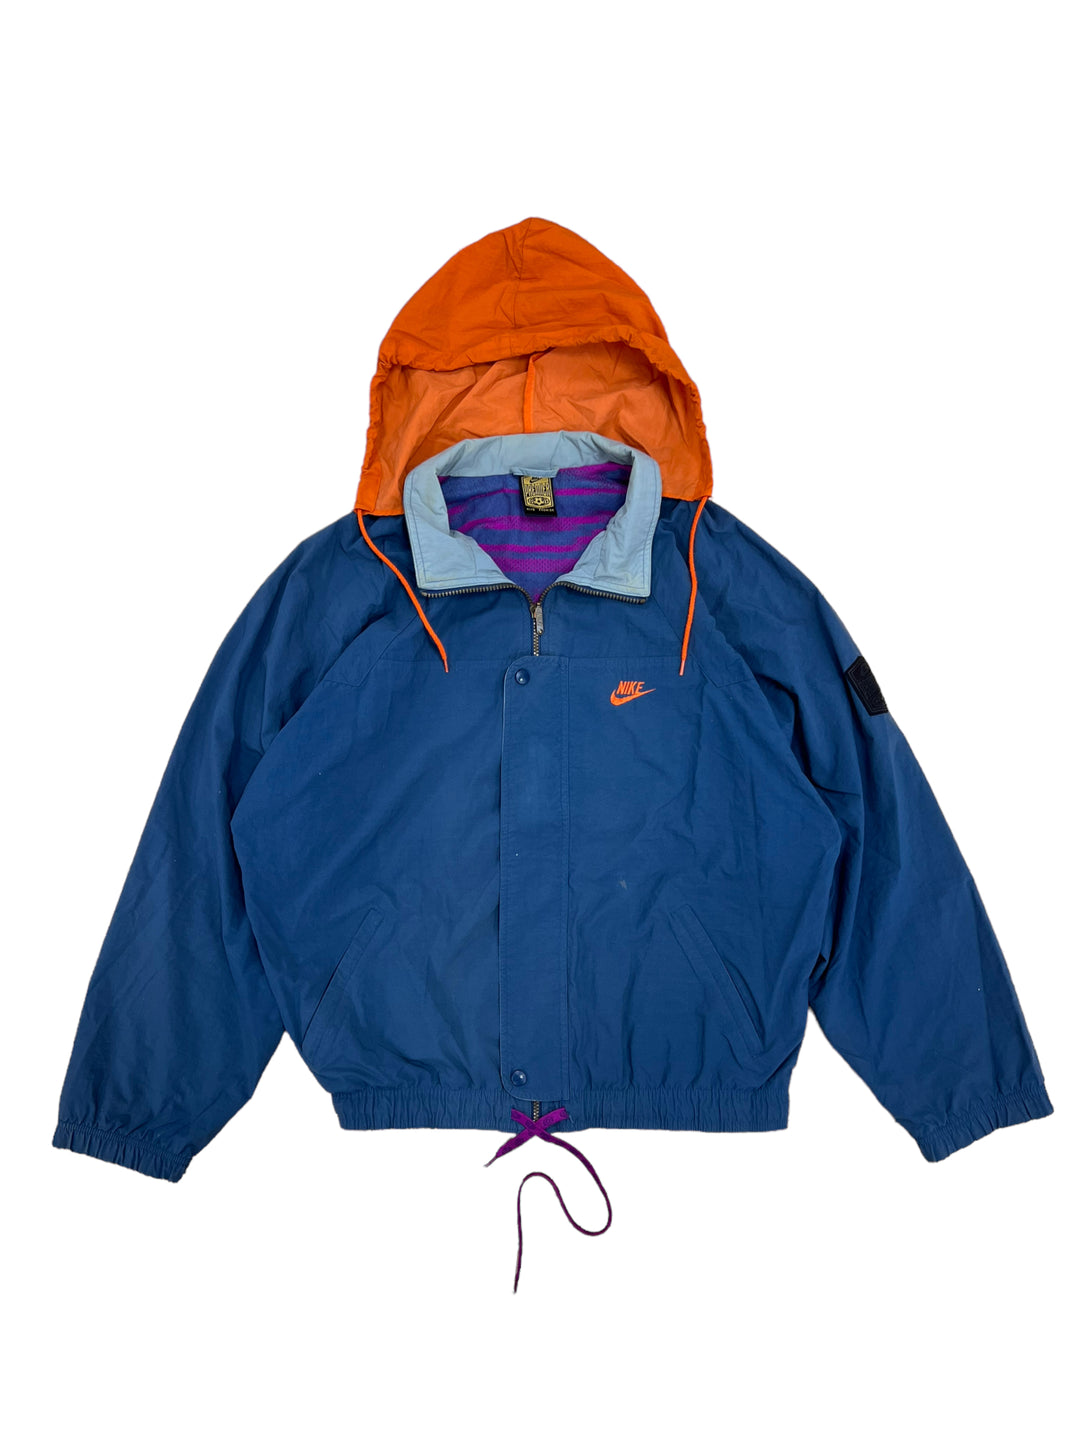 Nike Premier 90’s Hooded Jacket Men’s Medium